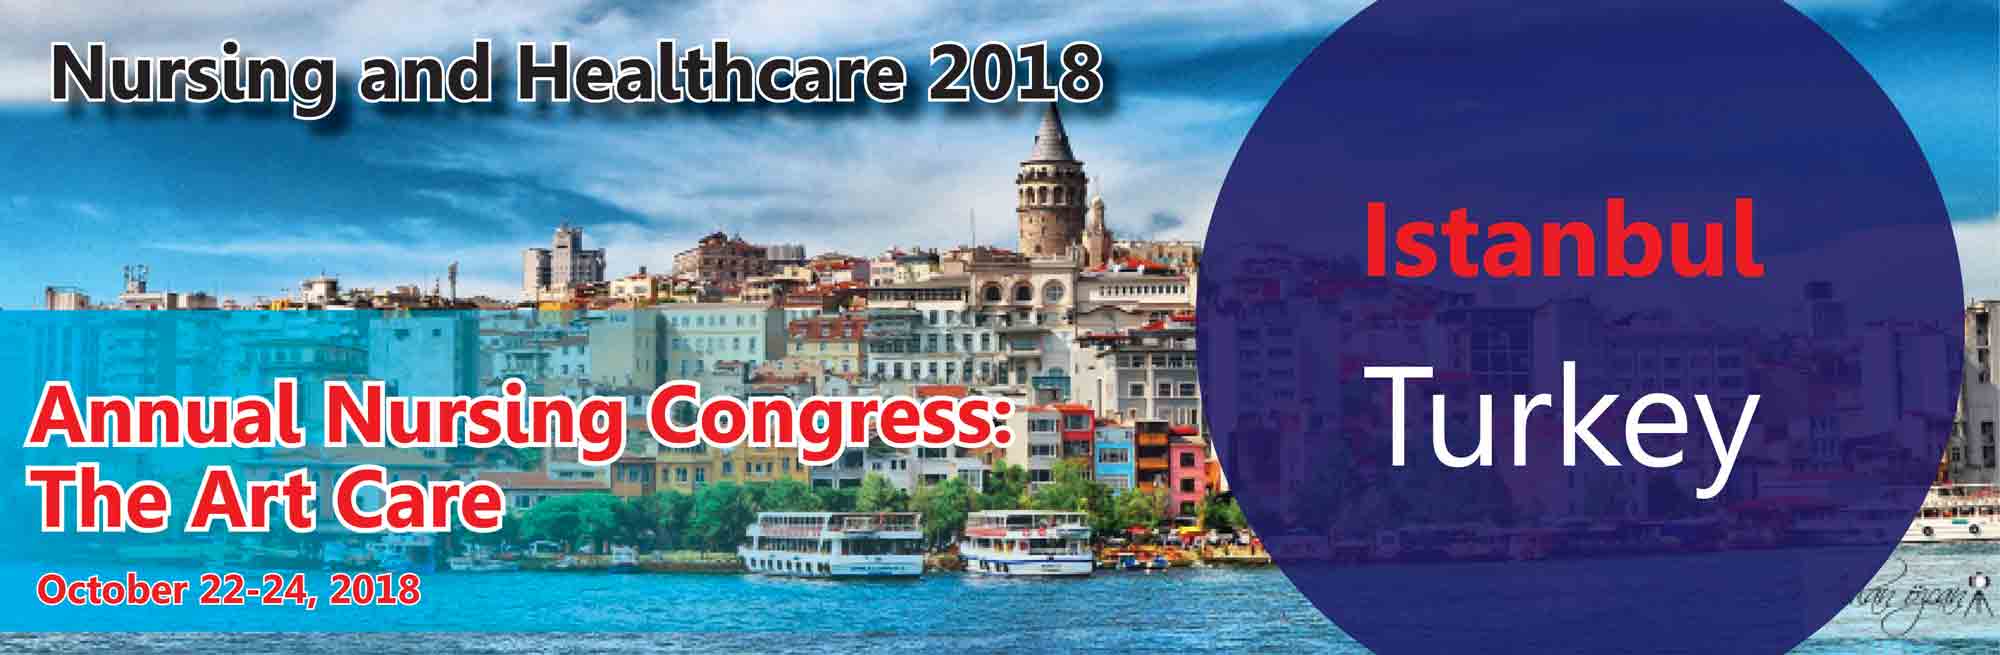 Annual Nursing Congress: The Art of Care, İstanbul, Turkey